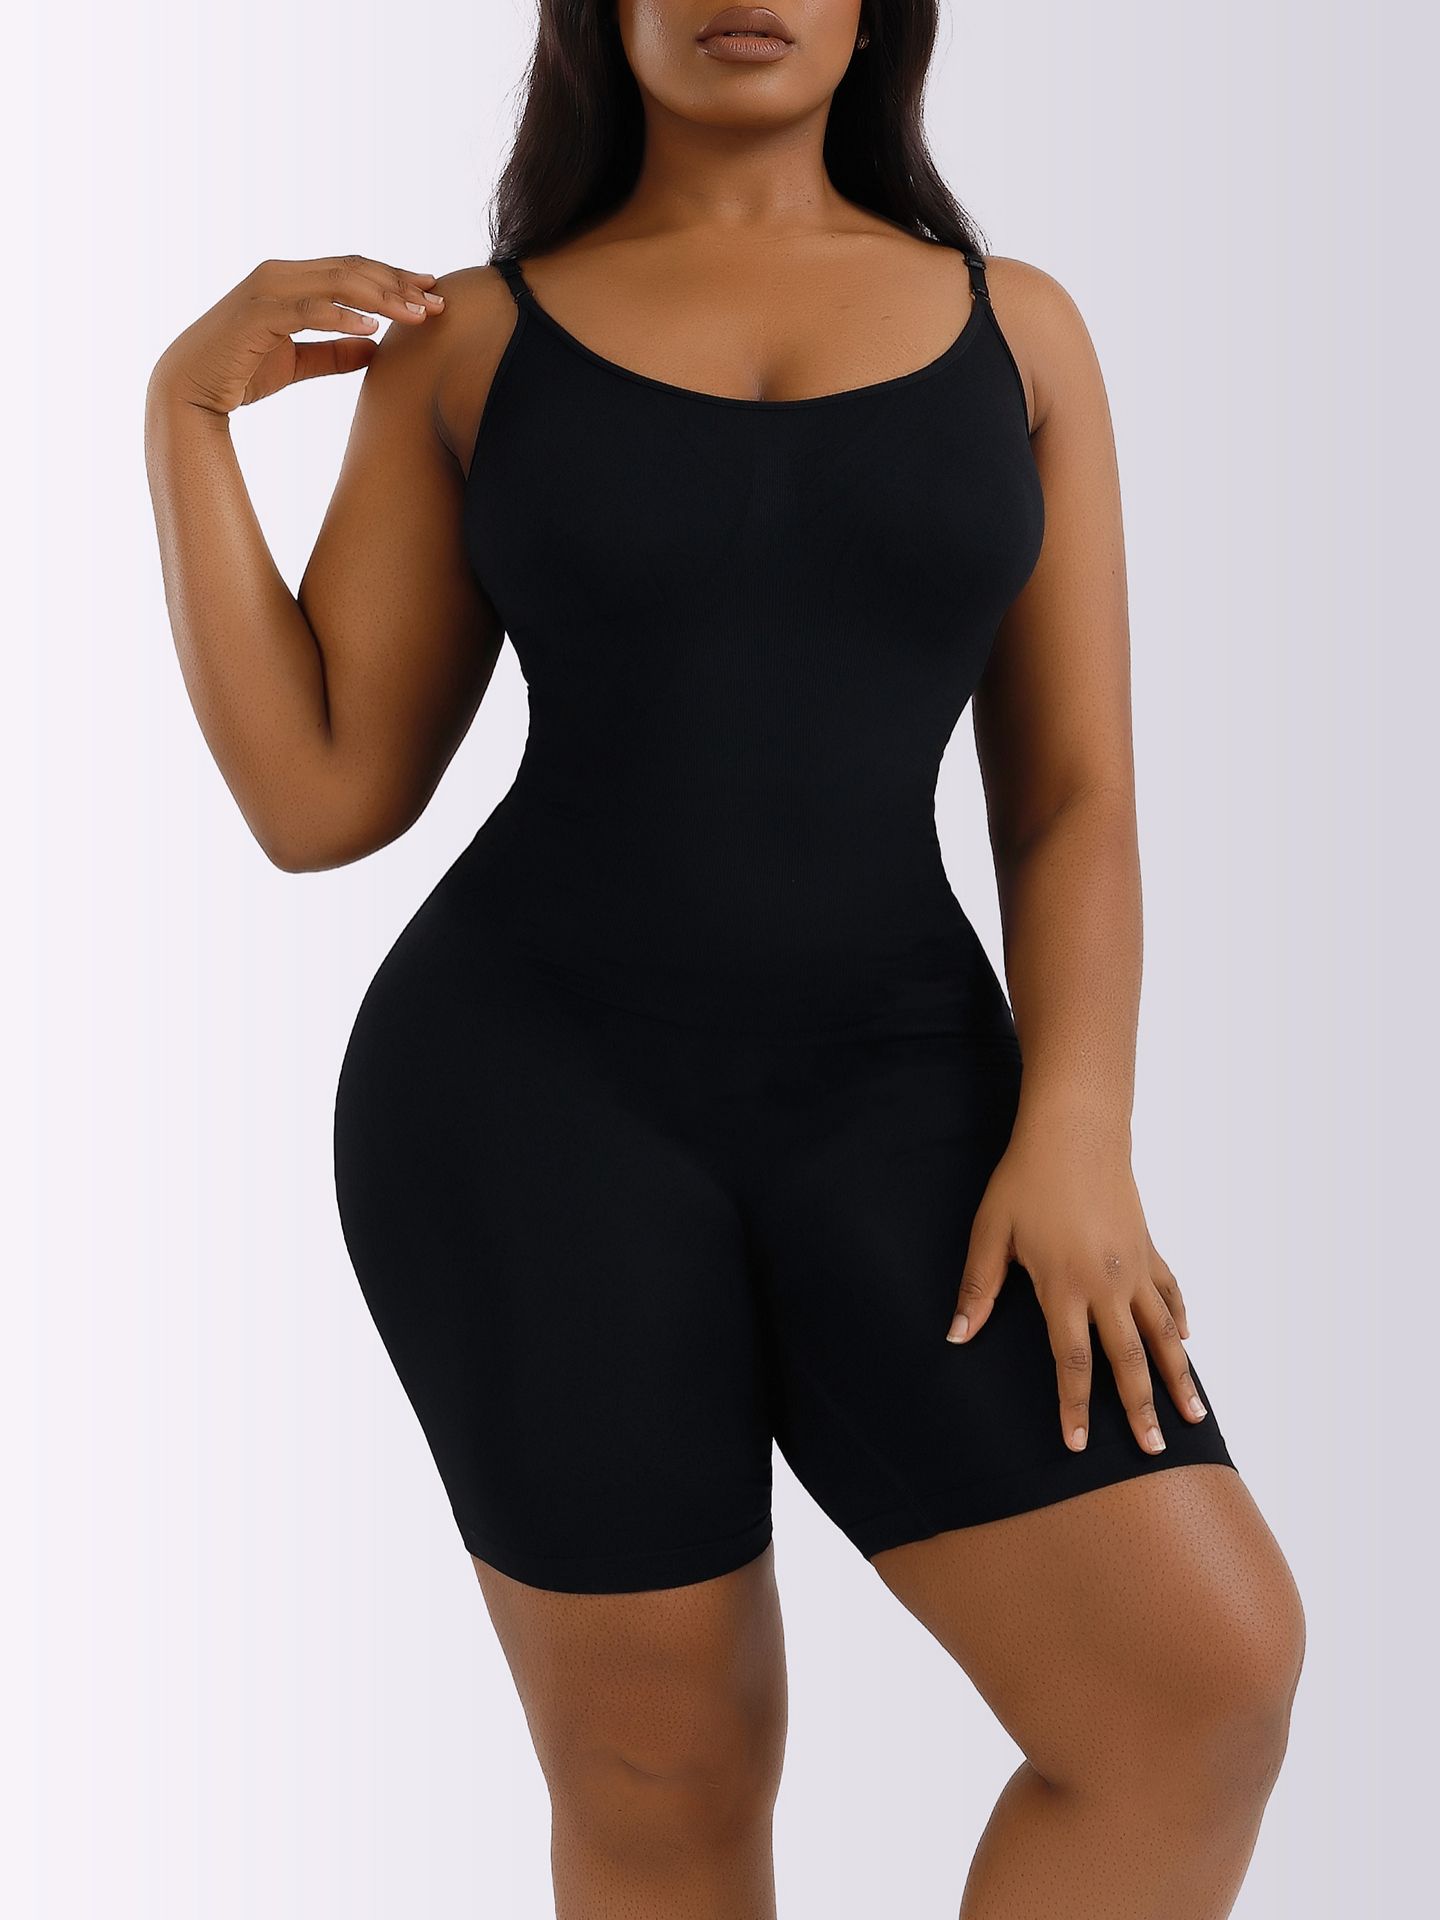 Fashion Bodysuit Shaperwear Womens Spy Tank Top Tummy Control Bodycon  Stretch Shorts Jumpsuit Rompers Thigh Body Shaper @ Best Price Online